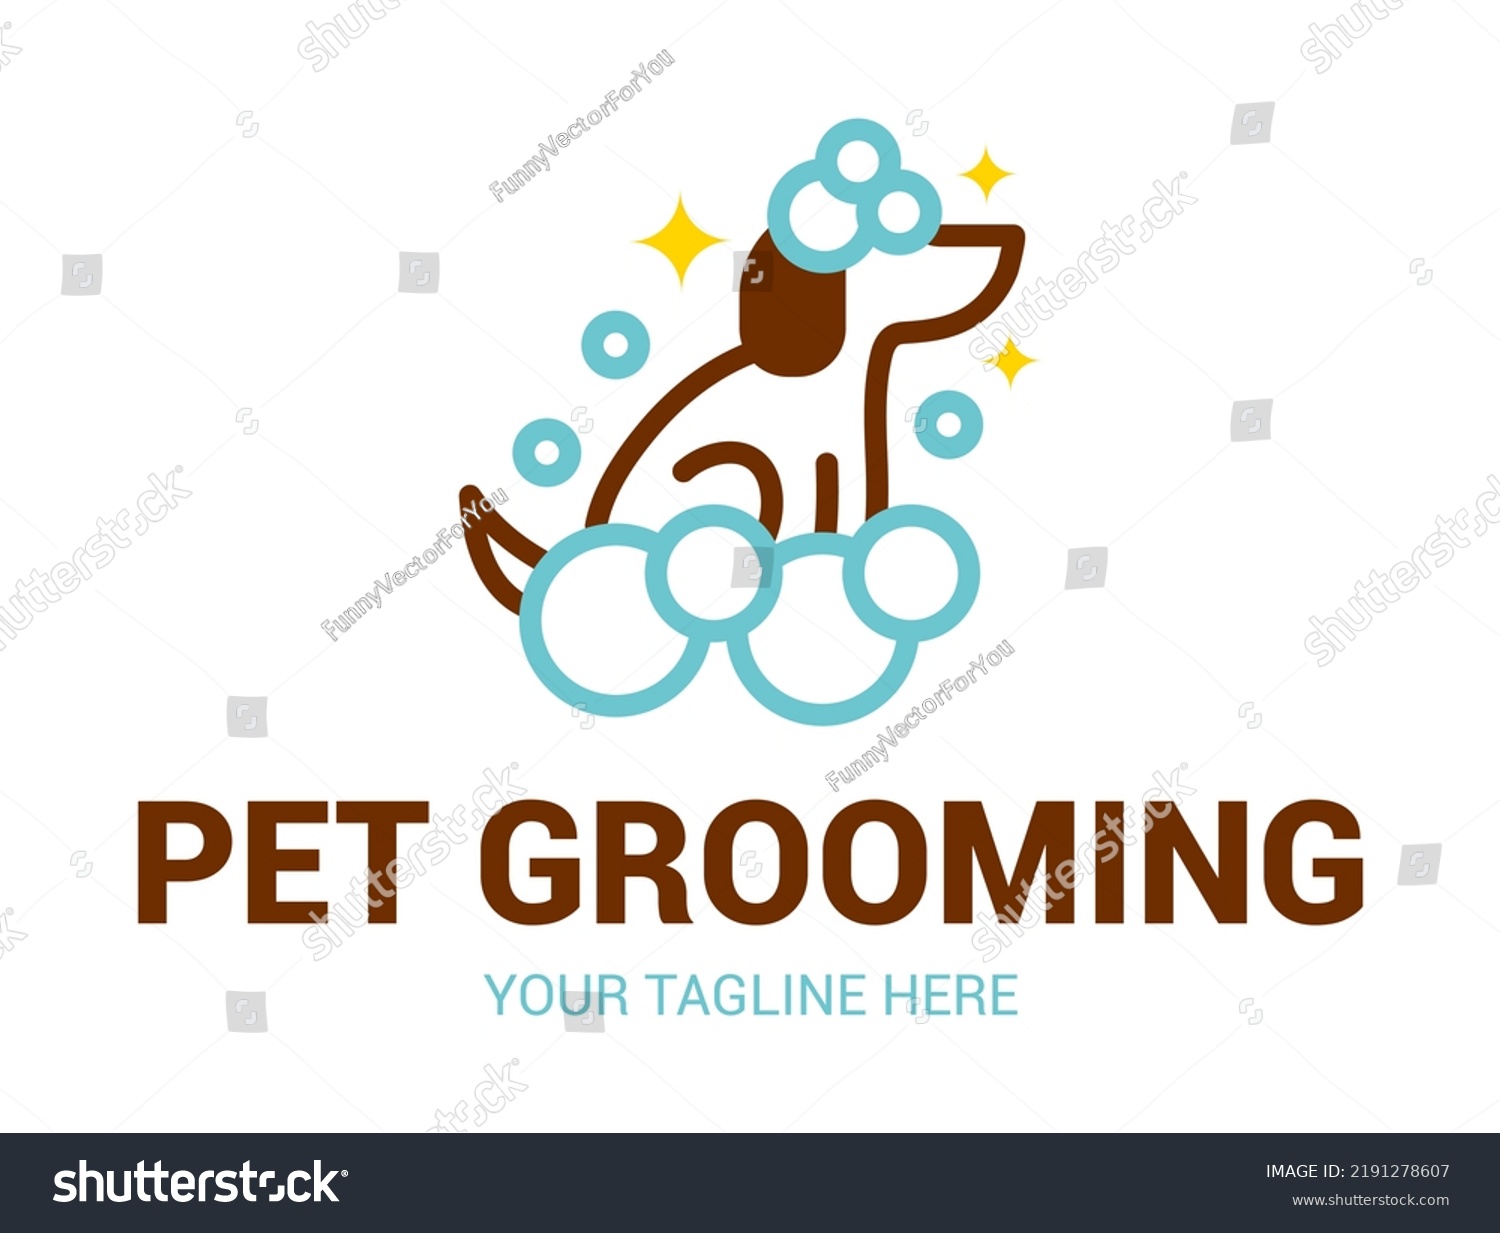 SVG of Dog or pet grooming and washing logo design template. Pet Care salon sign. Vector illustration. svg